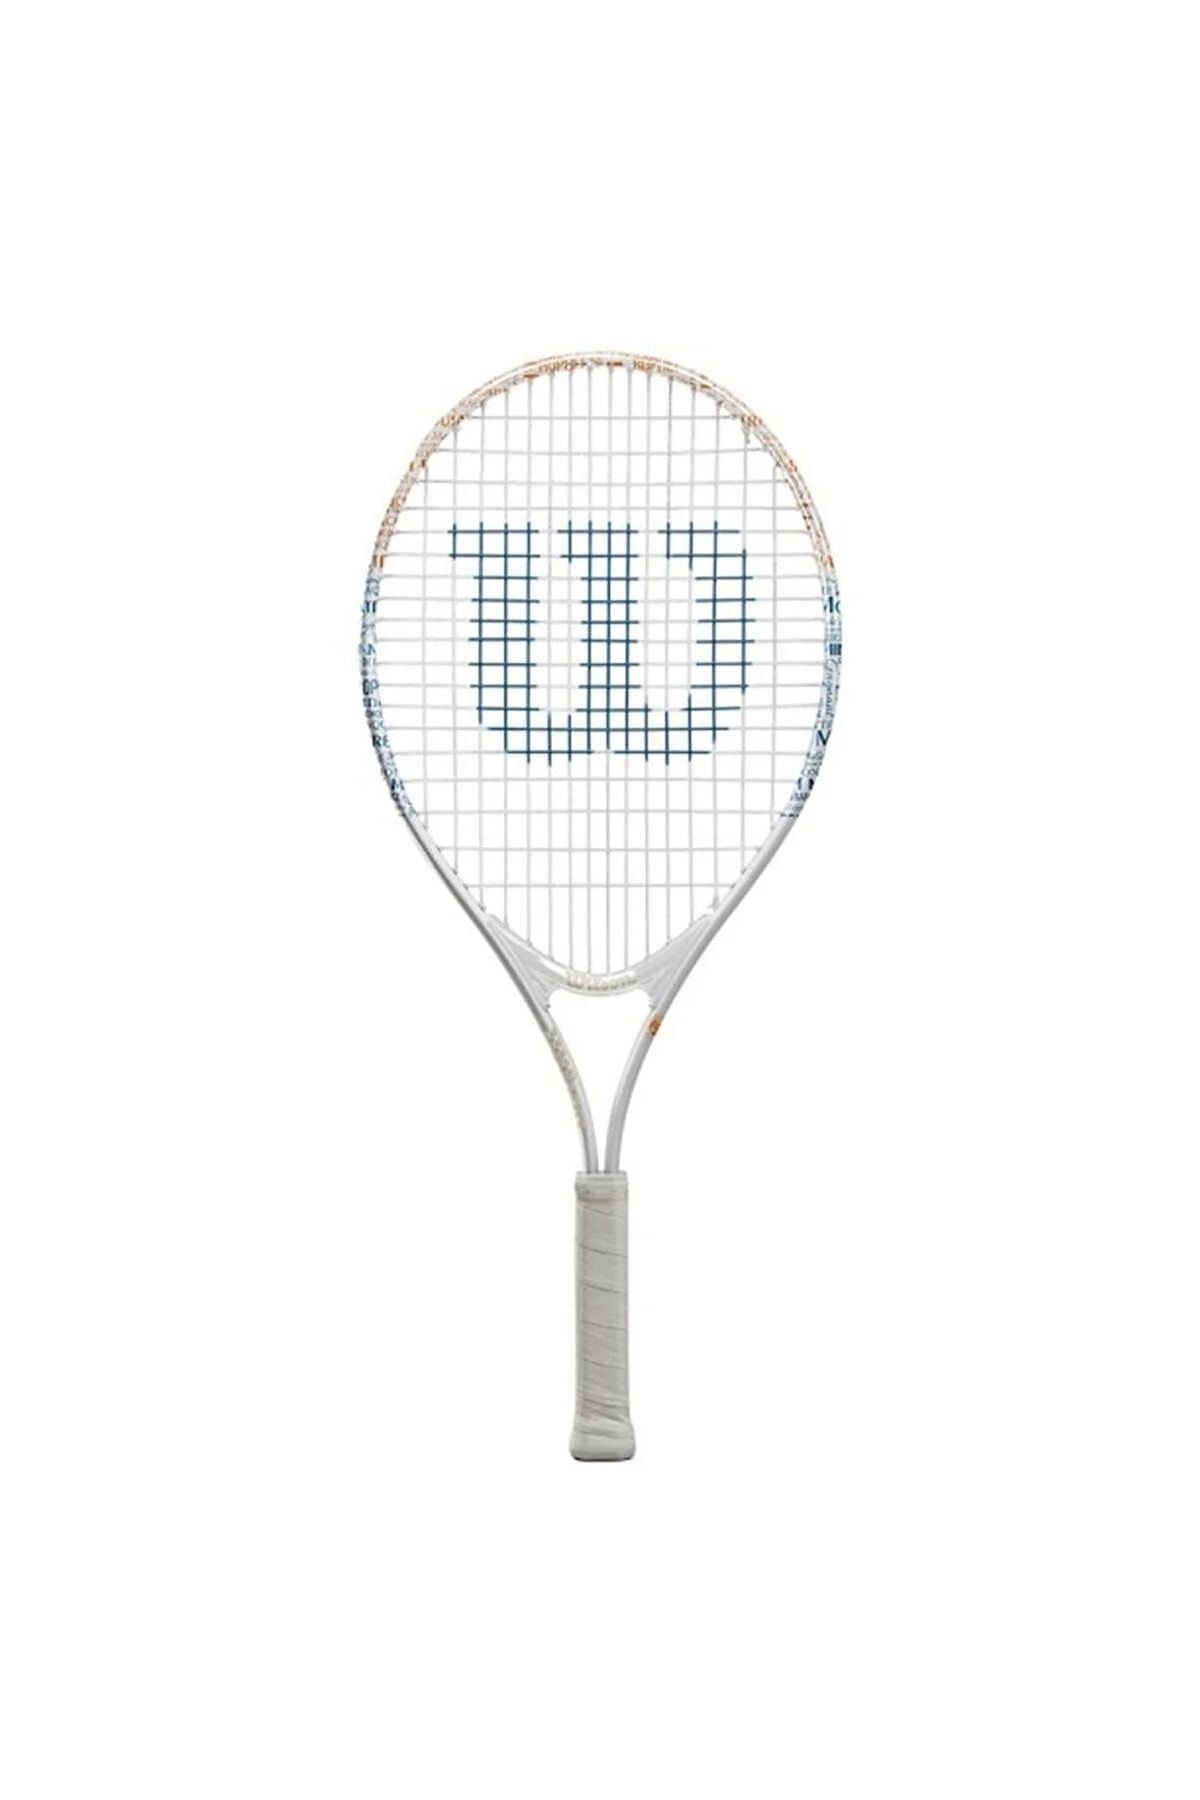 Wilson Roland Garros Elıte 25 Junıor Tenis Raketi-wr086310